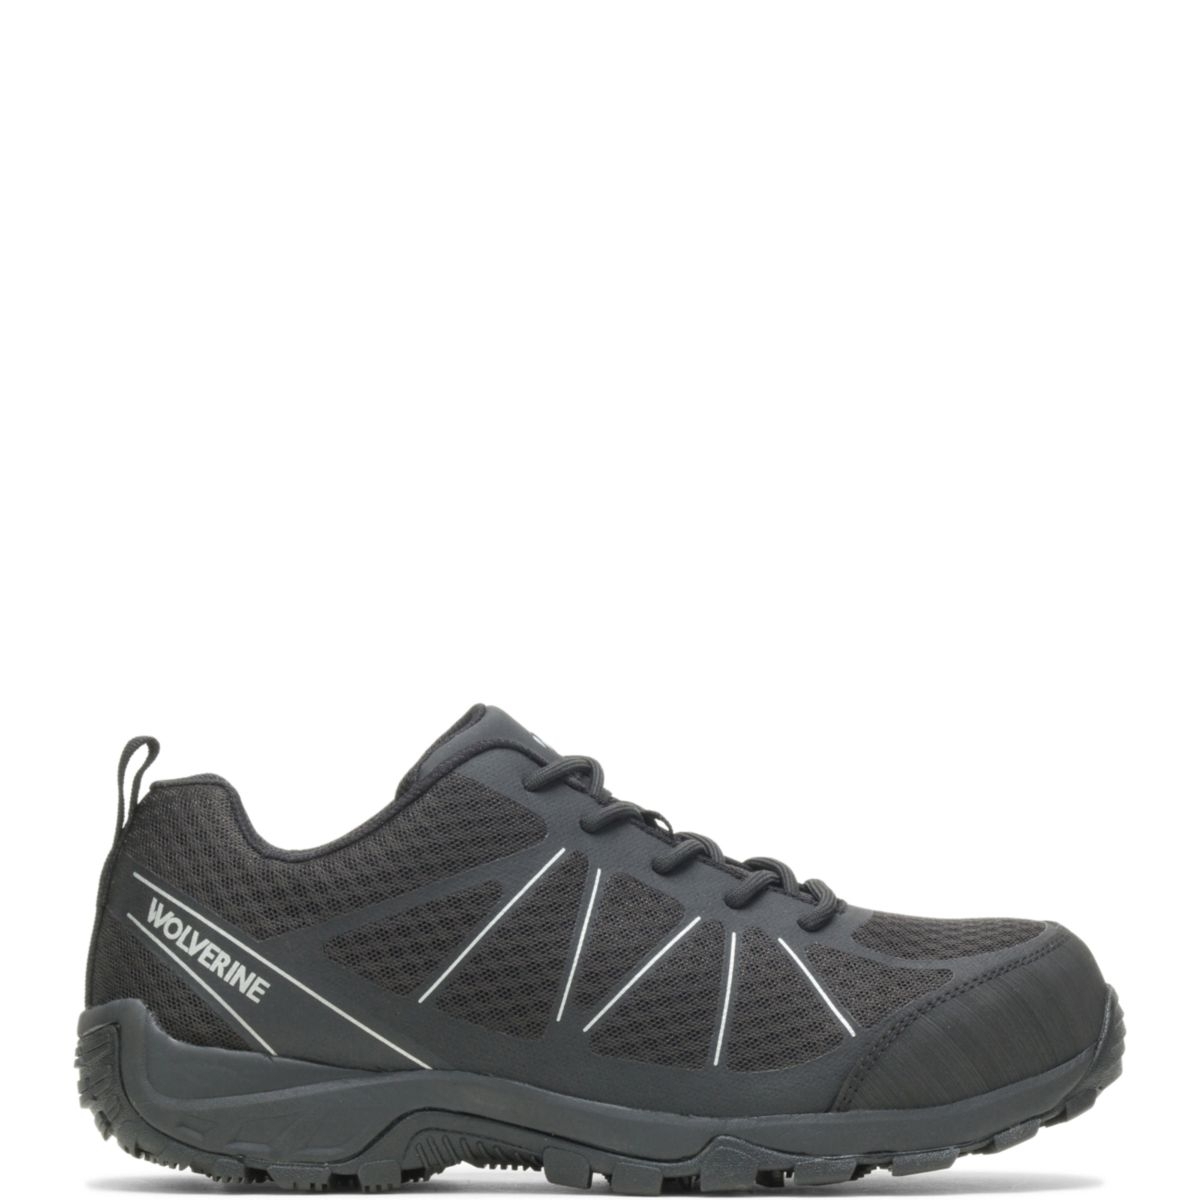 WOLVERINE Men's Amherst II CarbonMAXÂ® Composite Toe Work Shoe Black - W201147 BLACK - BLACK, 10